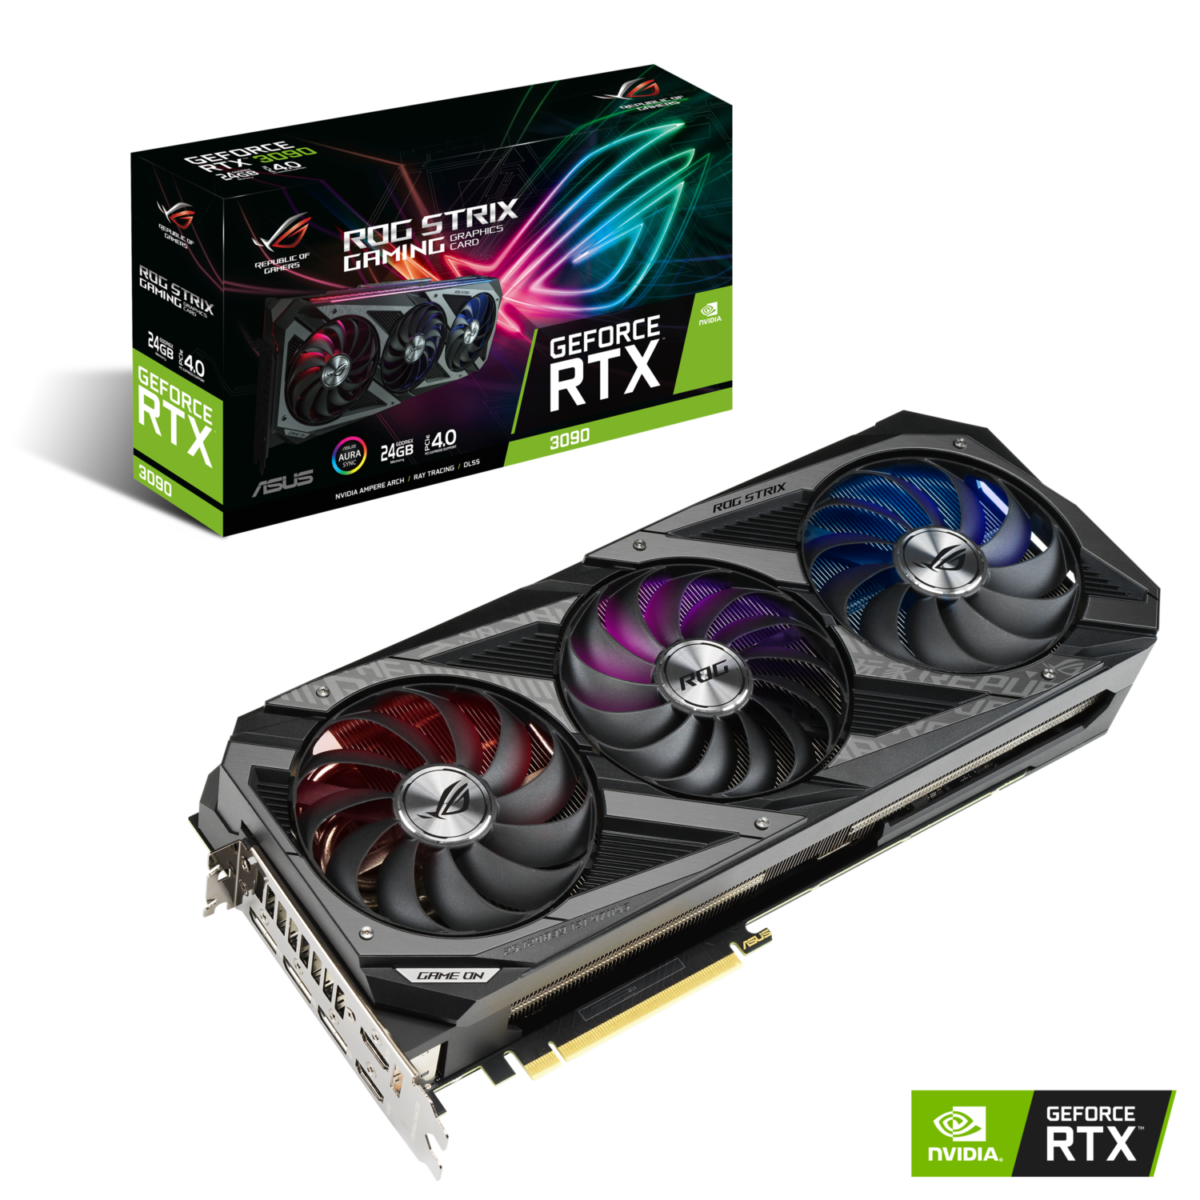 Asus Rog Strix, Tuf Gaming And Dual Nvidia Geforce Rtx 30 Series Gpus Announced